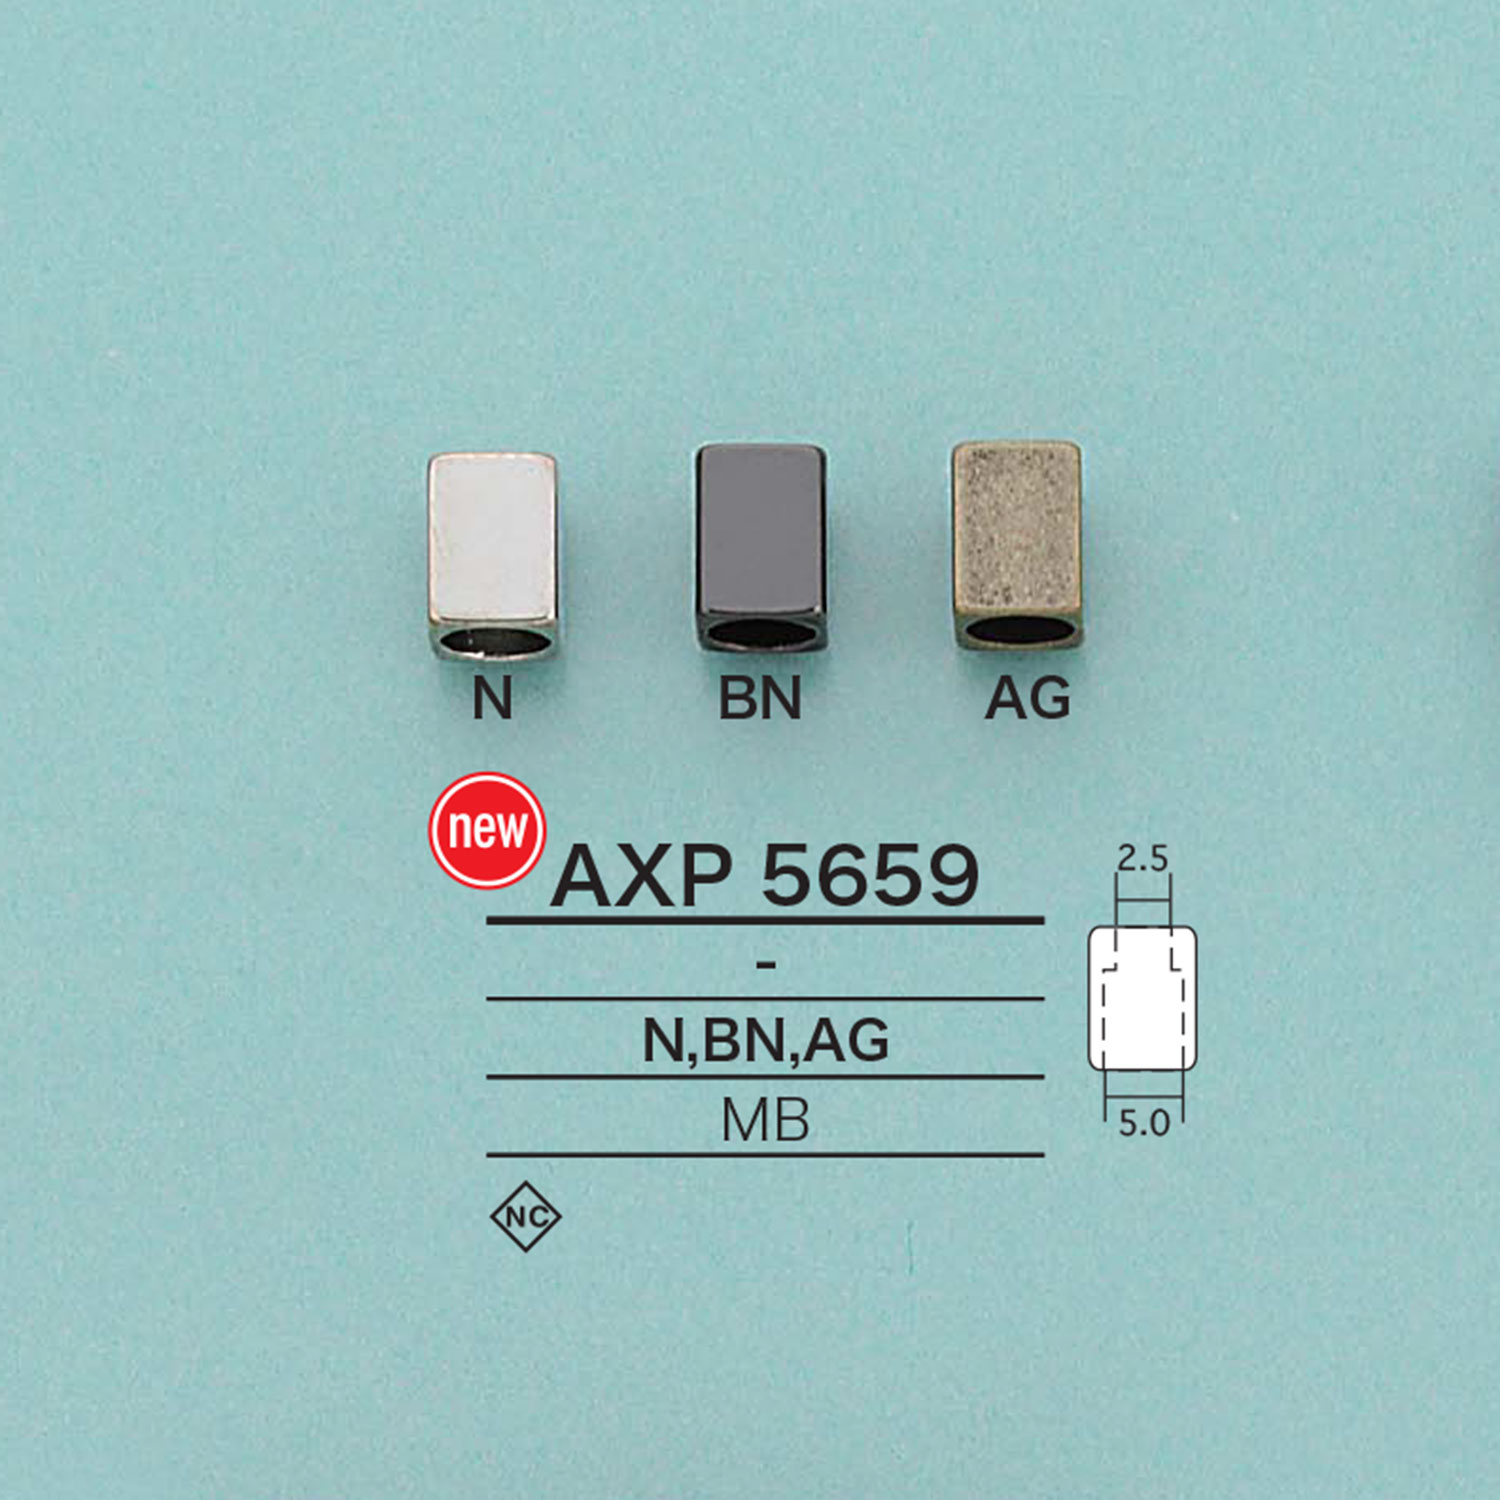 AXP5659 Quadratisches Kordelende[Schnallen Und Ring] IRIS